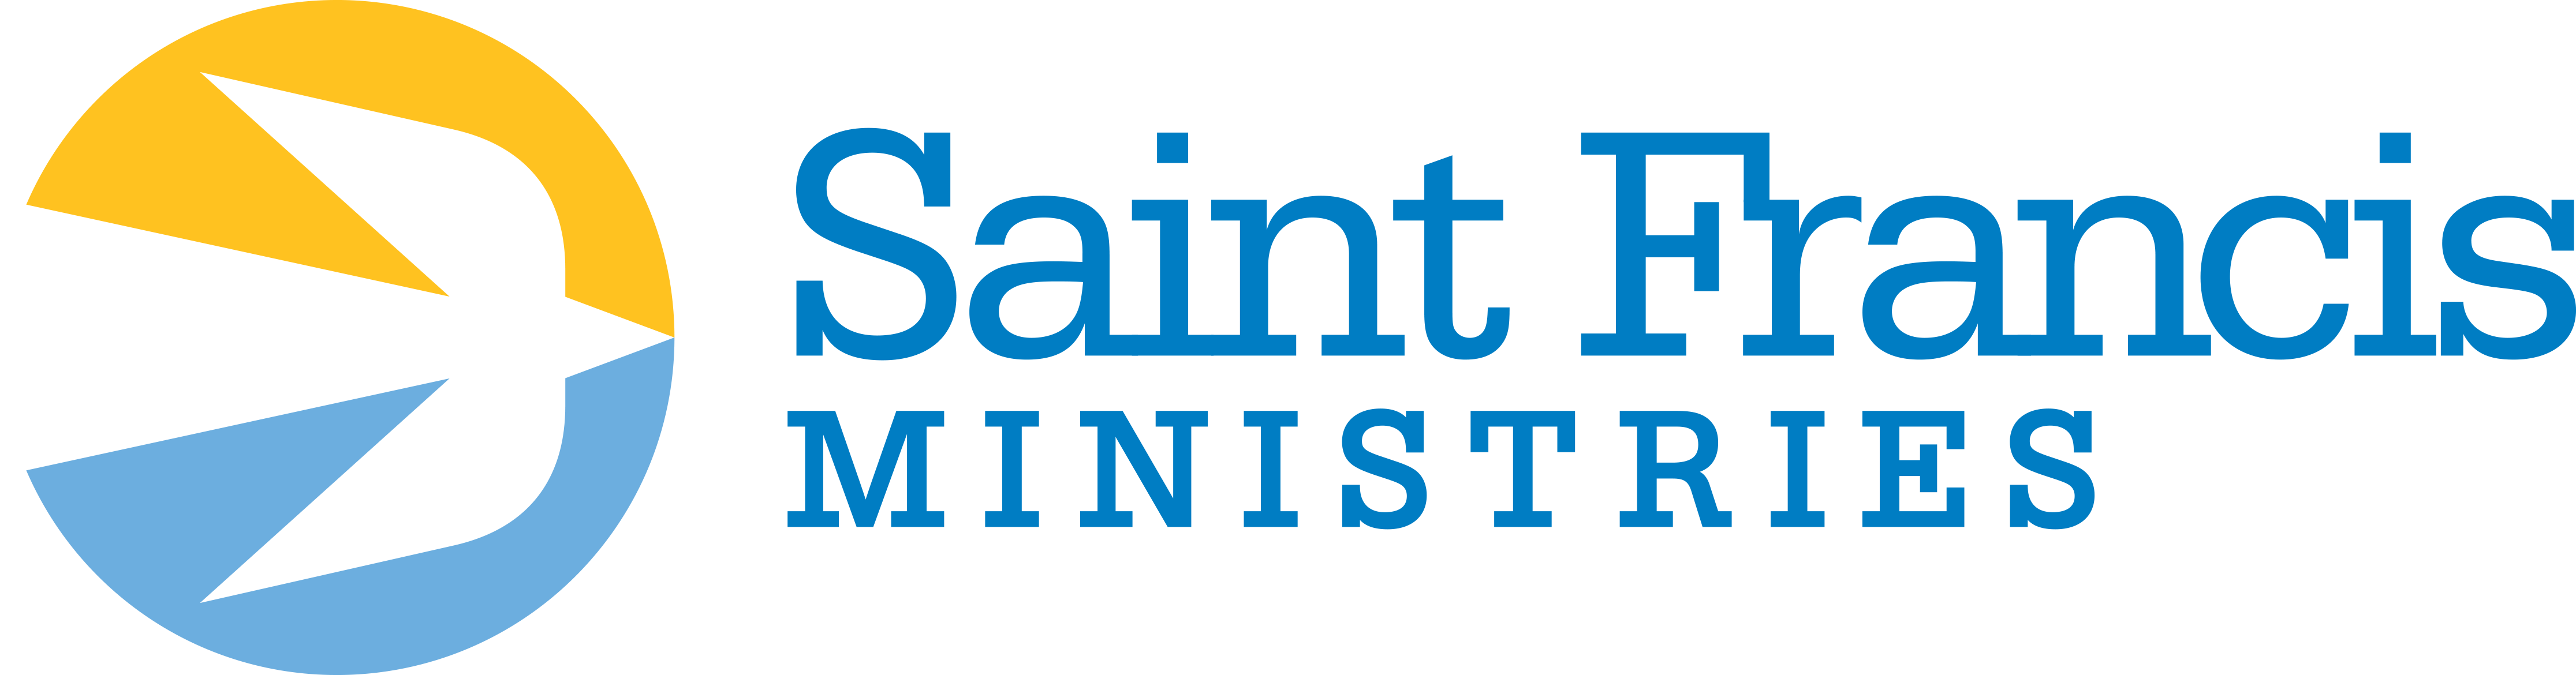 Saint Francis Ministries (2339)